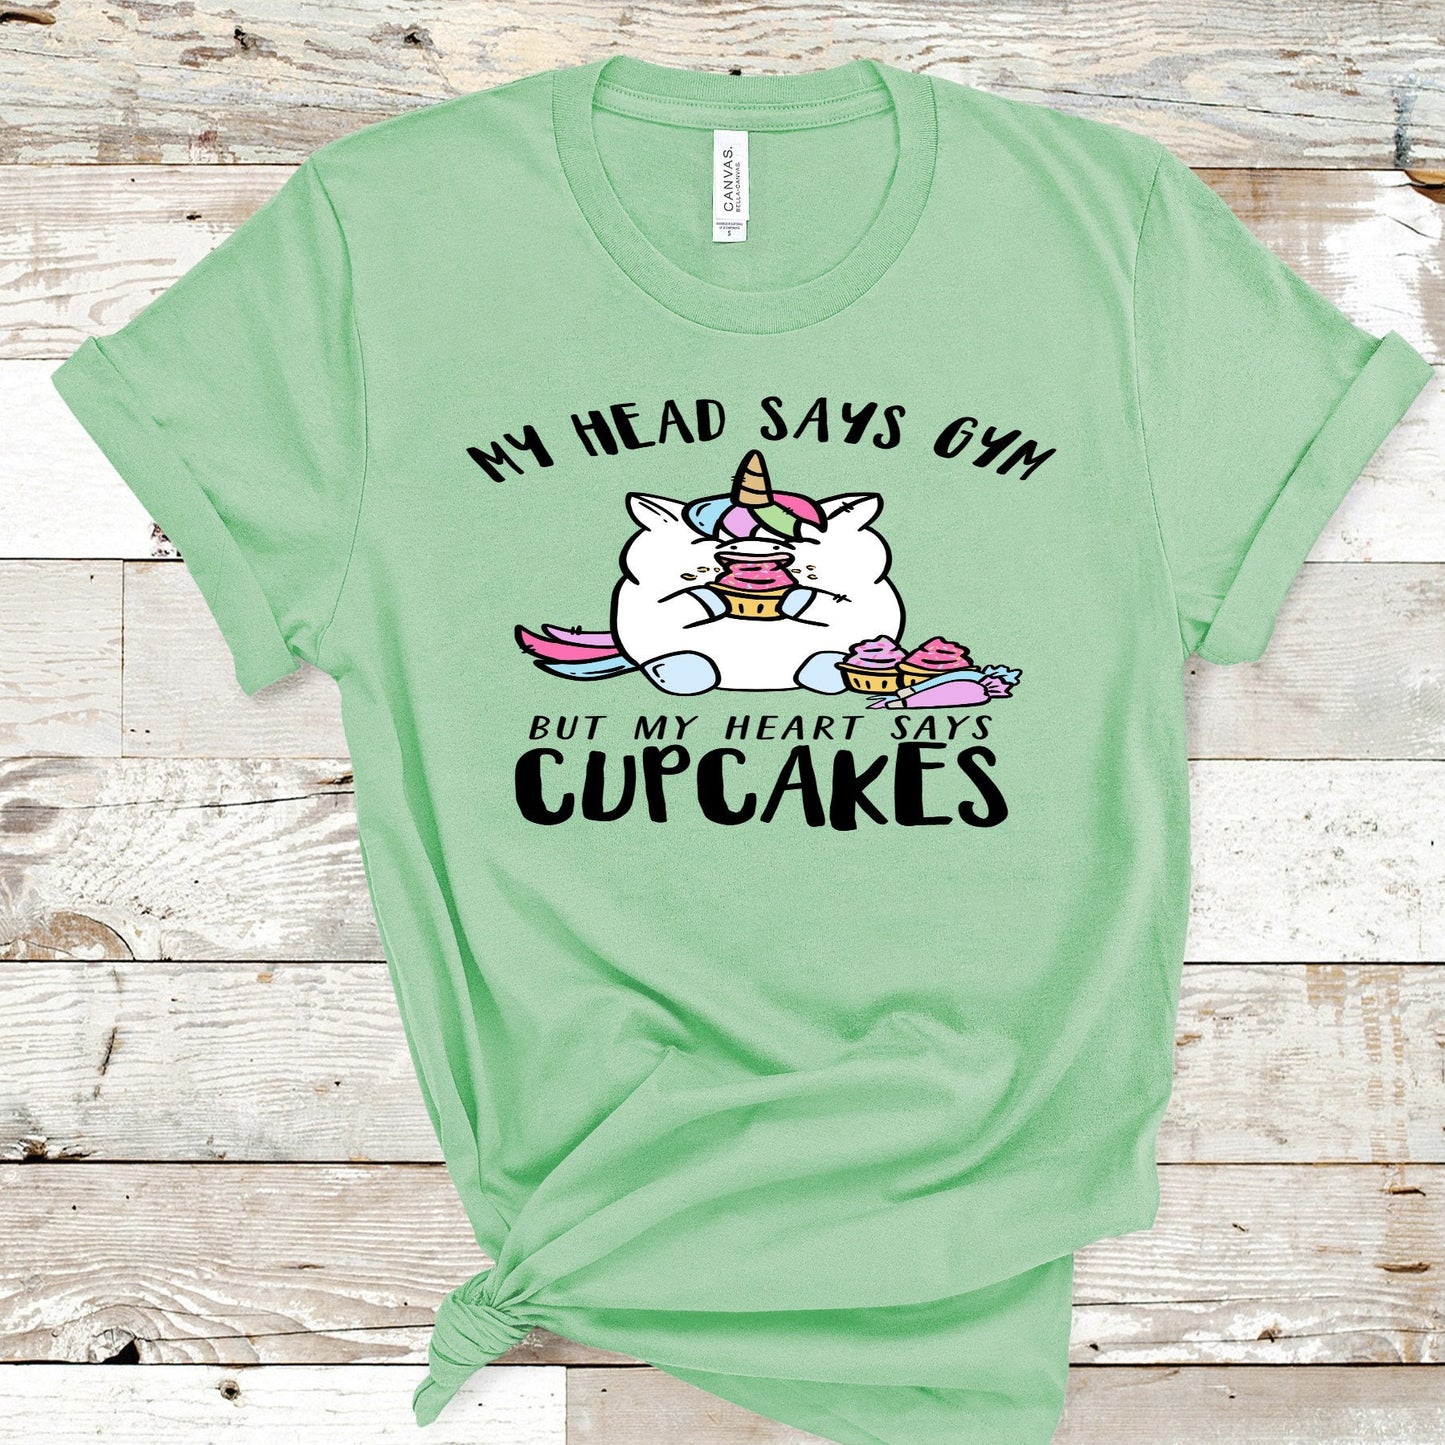 My Head Says Gym, But My Heart Says Cupcakes, Cupcakes Unicorn, Chubby Gym Unicorn, No Work Outs, Funny Unicorn shirt, Chubby Unicorn tee,